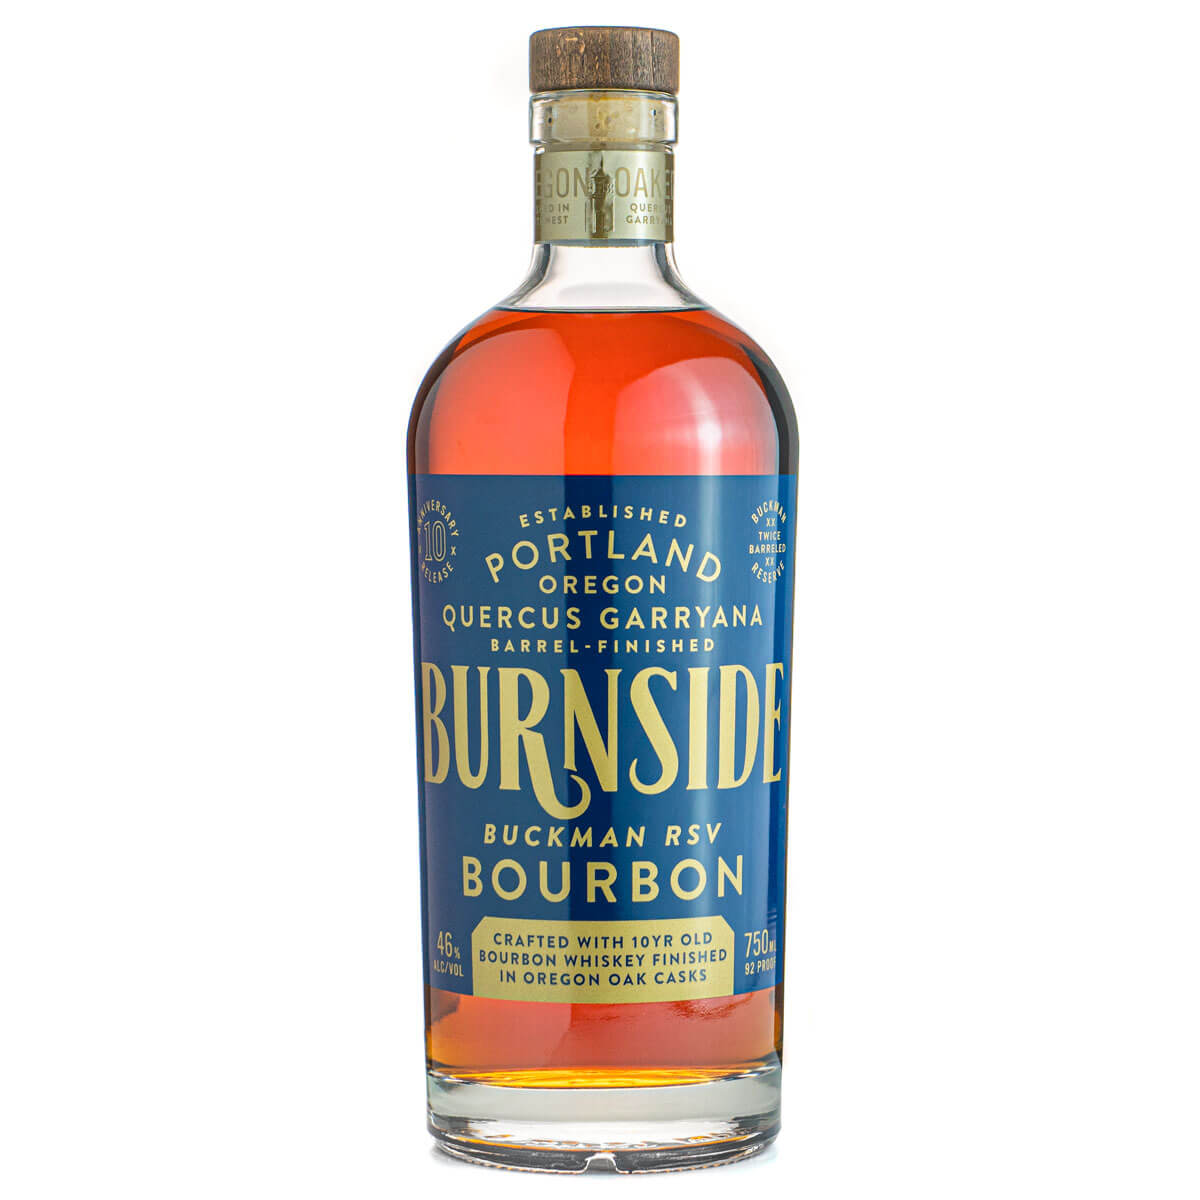 Burnside Buckman RSV Bourbon bottle